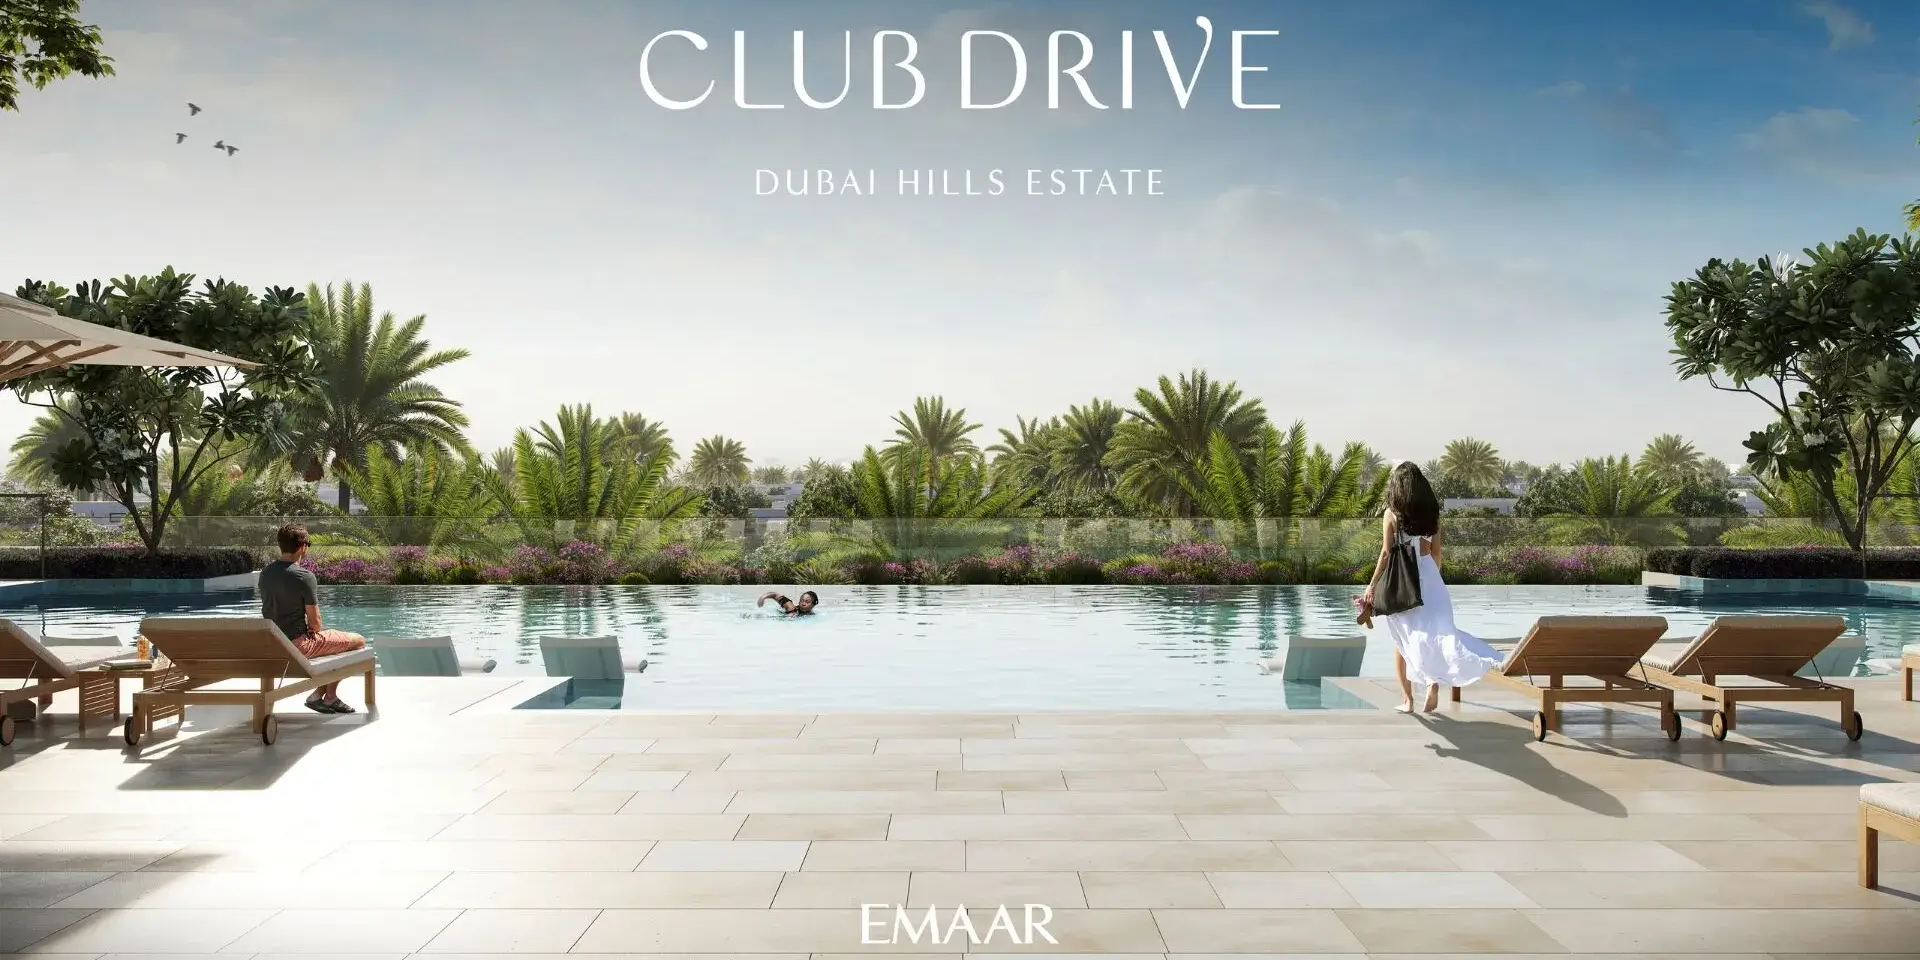 Club drive - Emaar immobilier à Dubai hills estate 